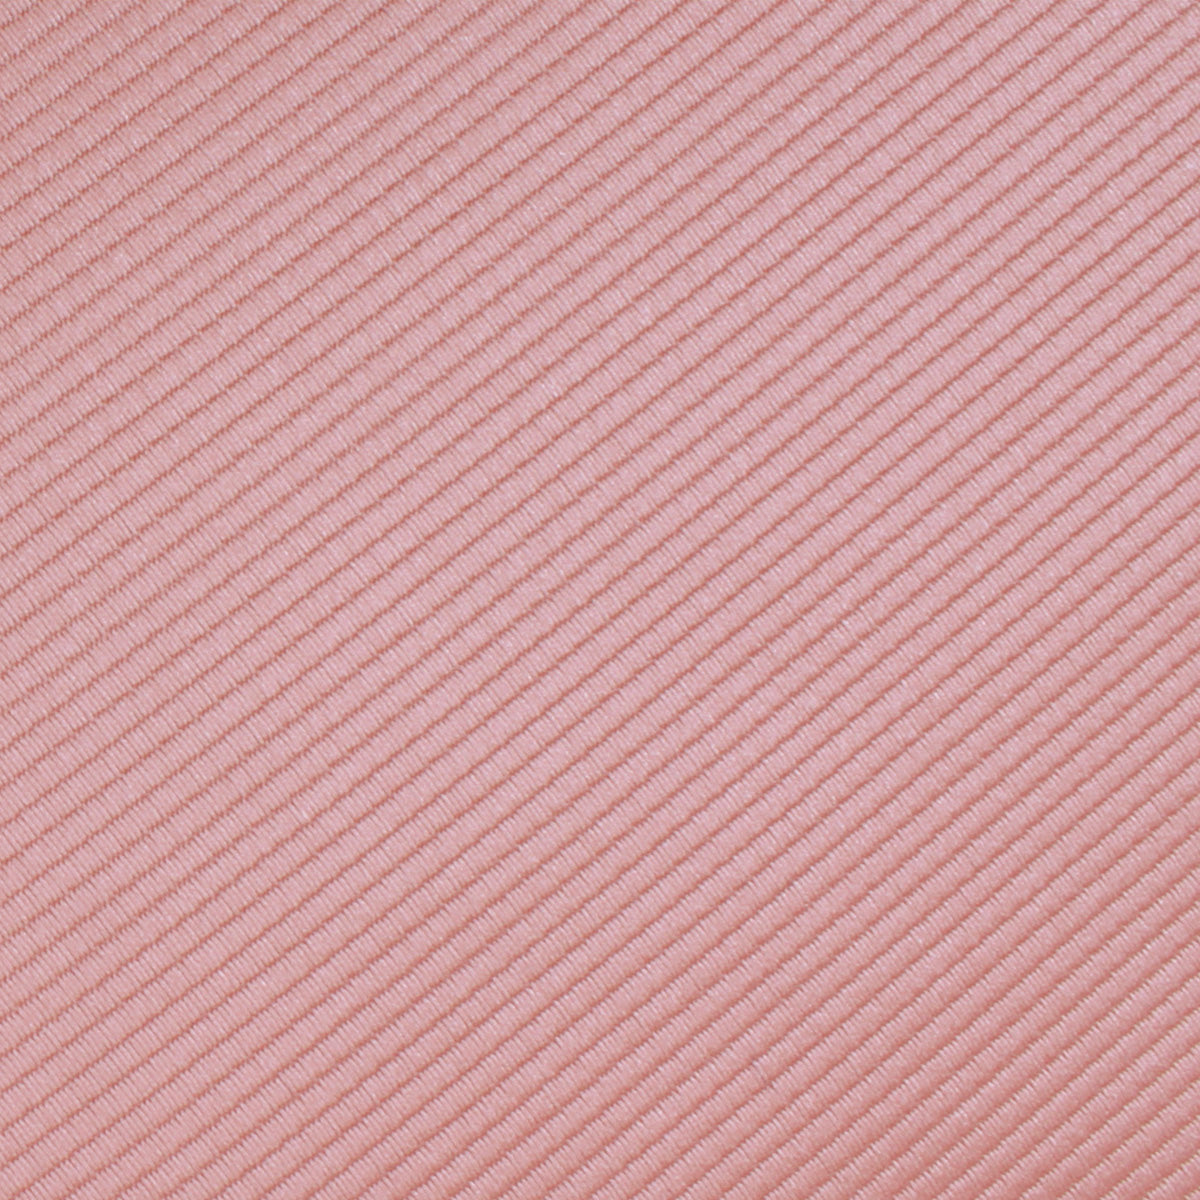 Dusty Blush Pink Twill Fabric Swatch